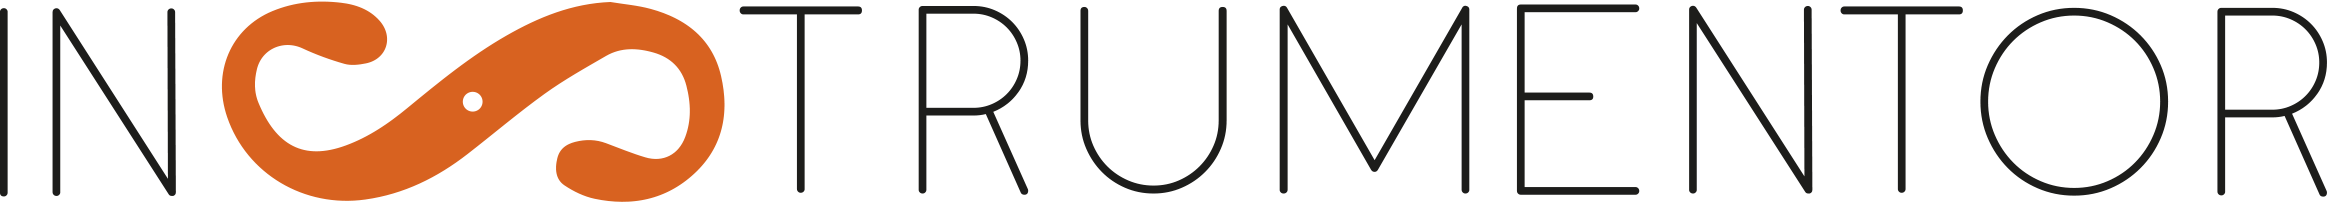 Asociația Instru-Mentor logo